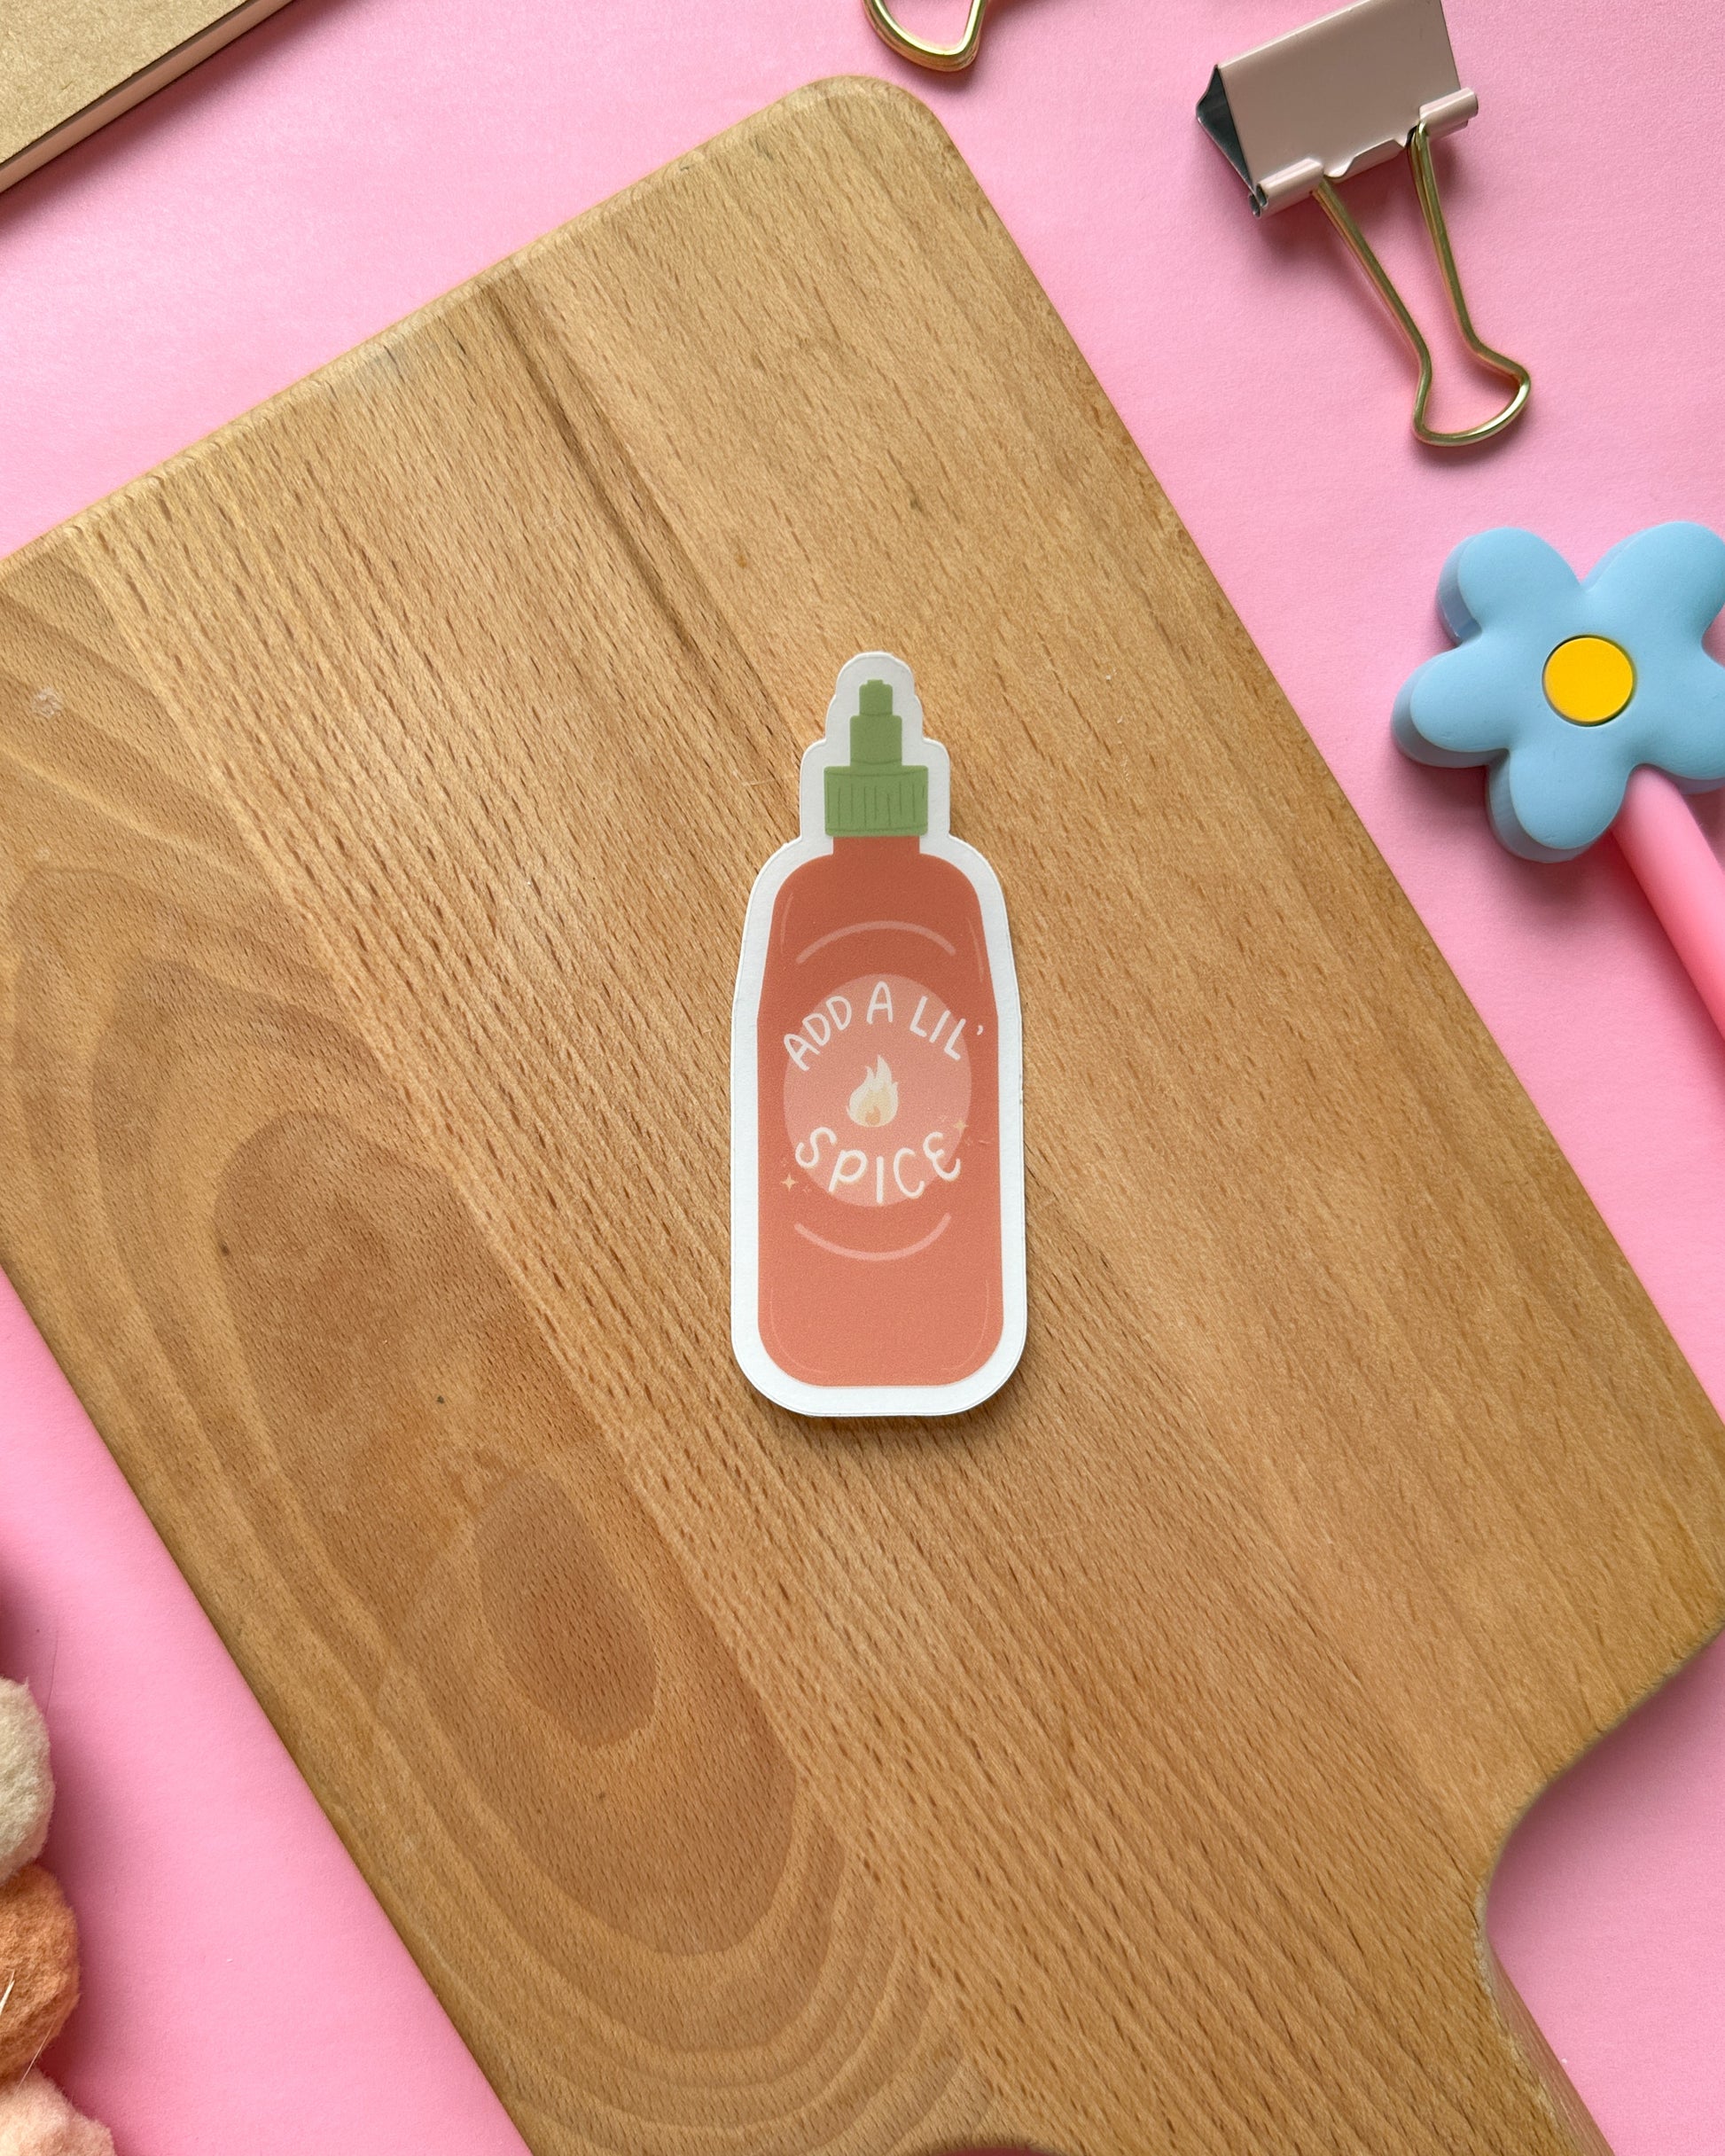 Sriracha hot sauce bottle sticker